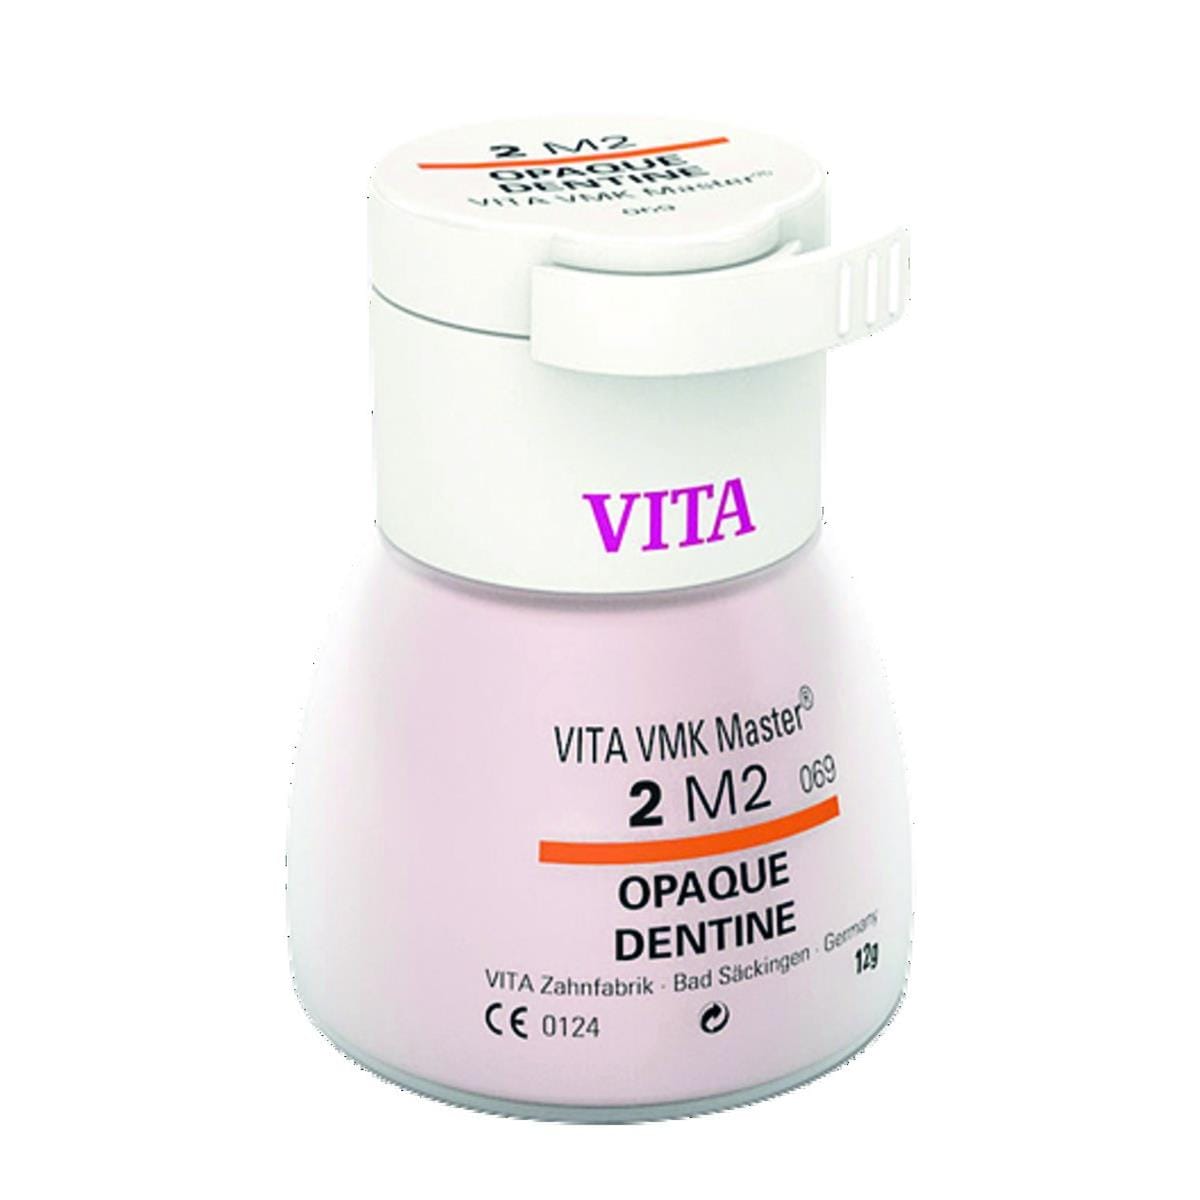 VMK Master VITA - Dentine Opaque - 3M3 - Le flacon de 12 g